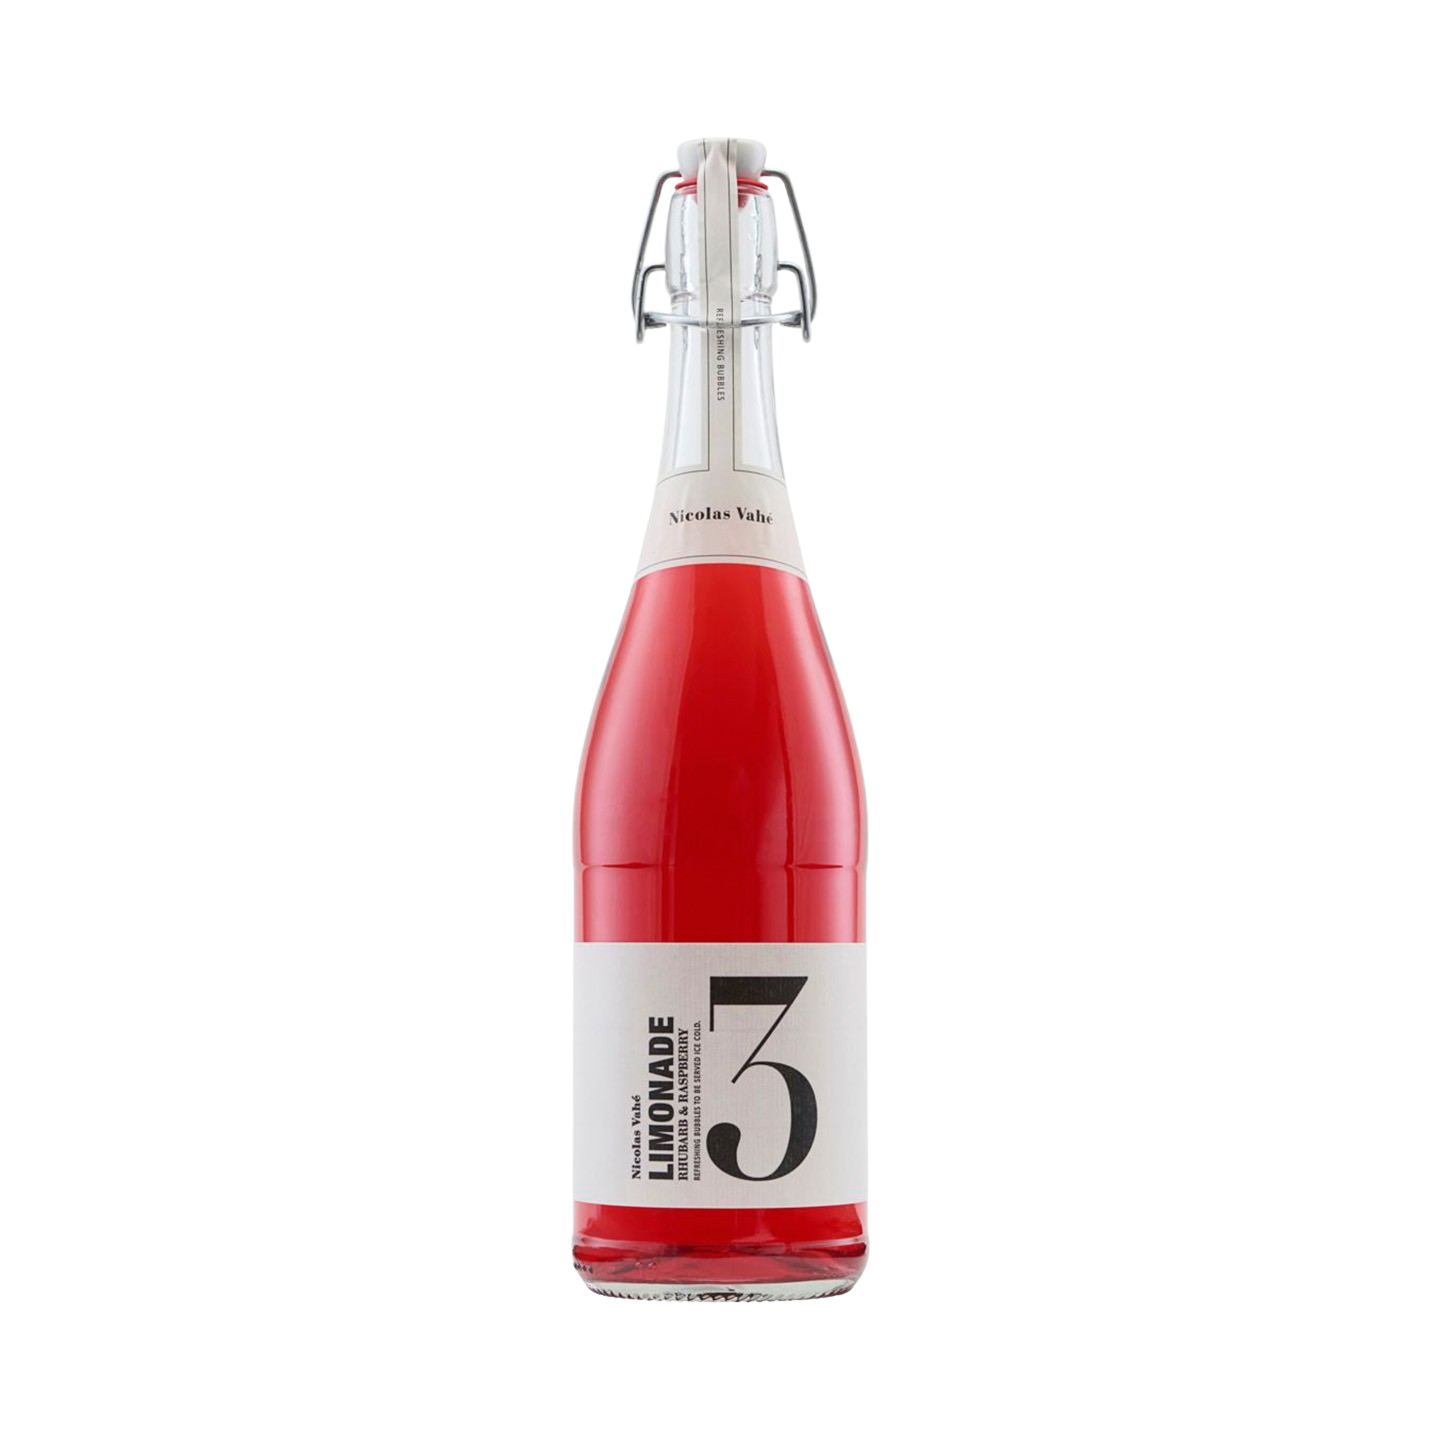 83890 Nicolas Vahé NV Lemonade - Rhubarb & Raspberry